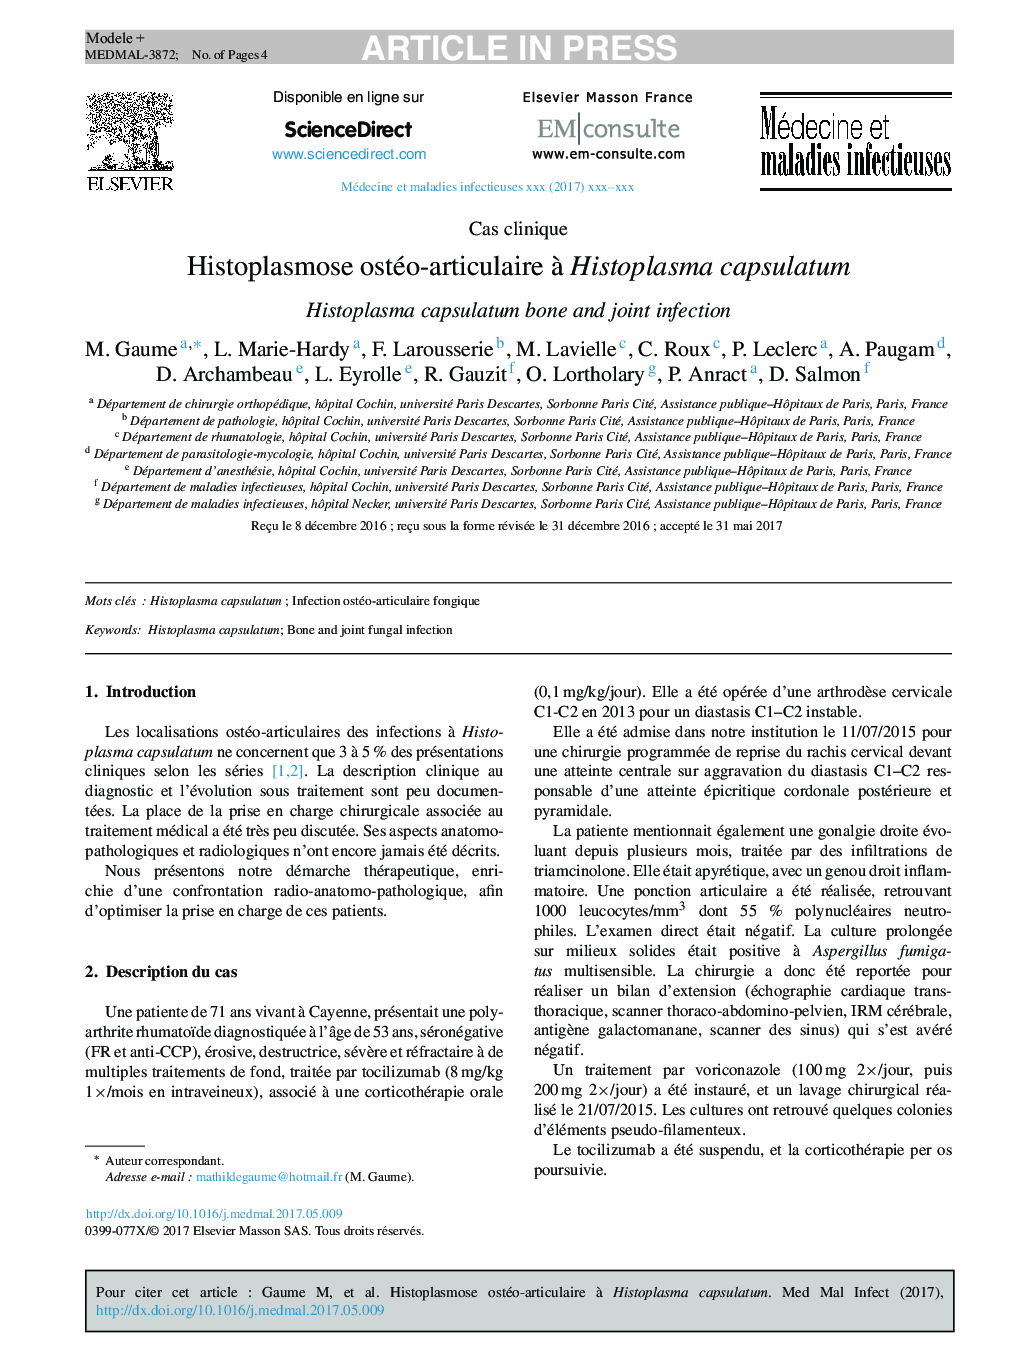 Histoplasmose ostéo-articulaire Ã  Histoplasma capsulatum